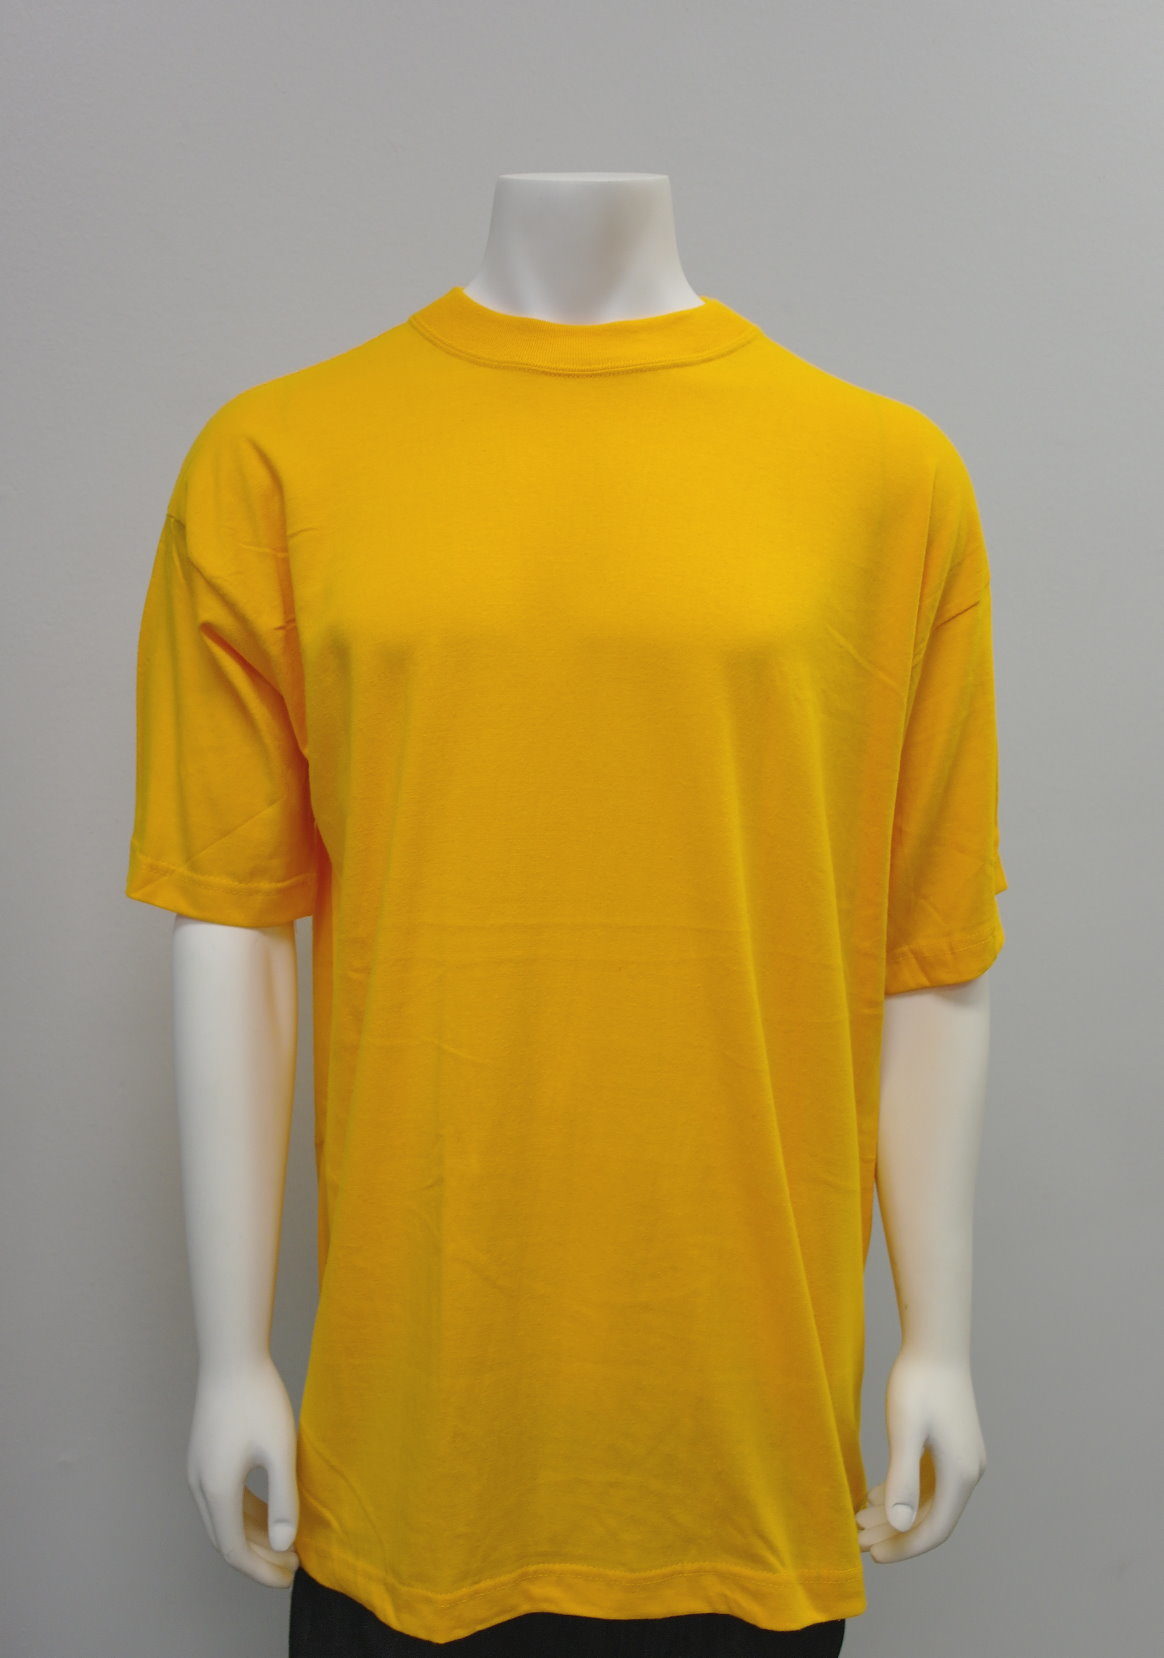 Gemrock Plain Gold Crew-neck Shirt 100% High Quality Cotton